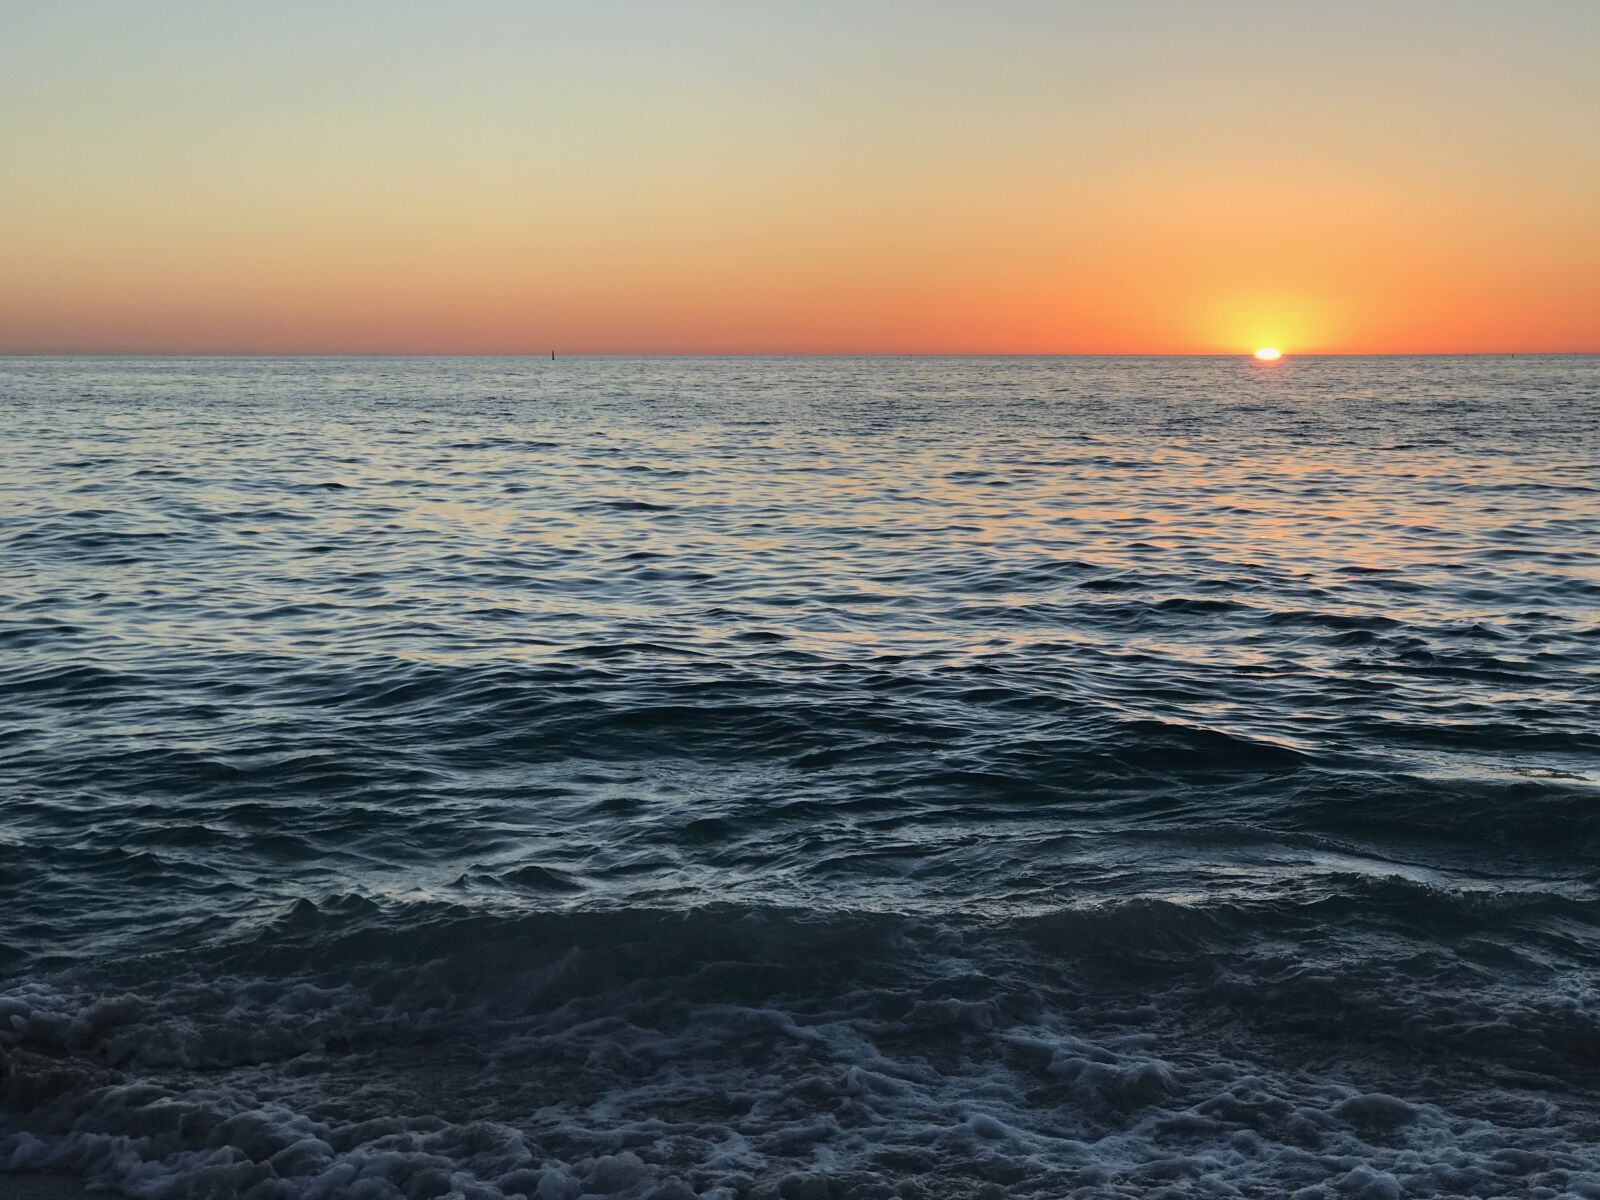 iPhone 7 Plus back dual camera 6.6mm f/2.8 sample photo. Beach, ocean, sunset photography